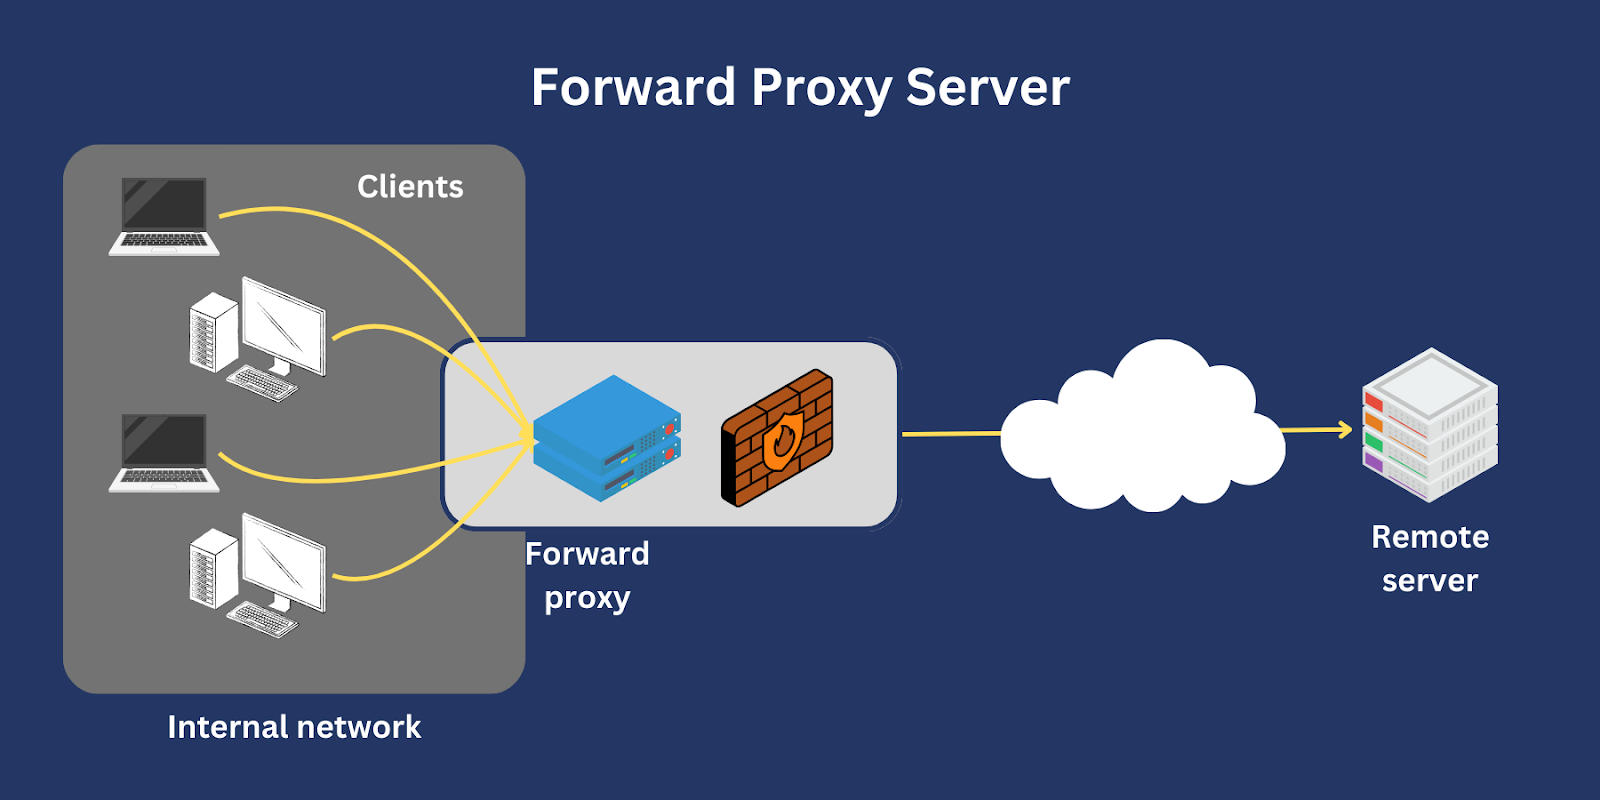 Forward proxy server